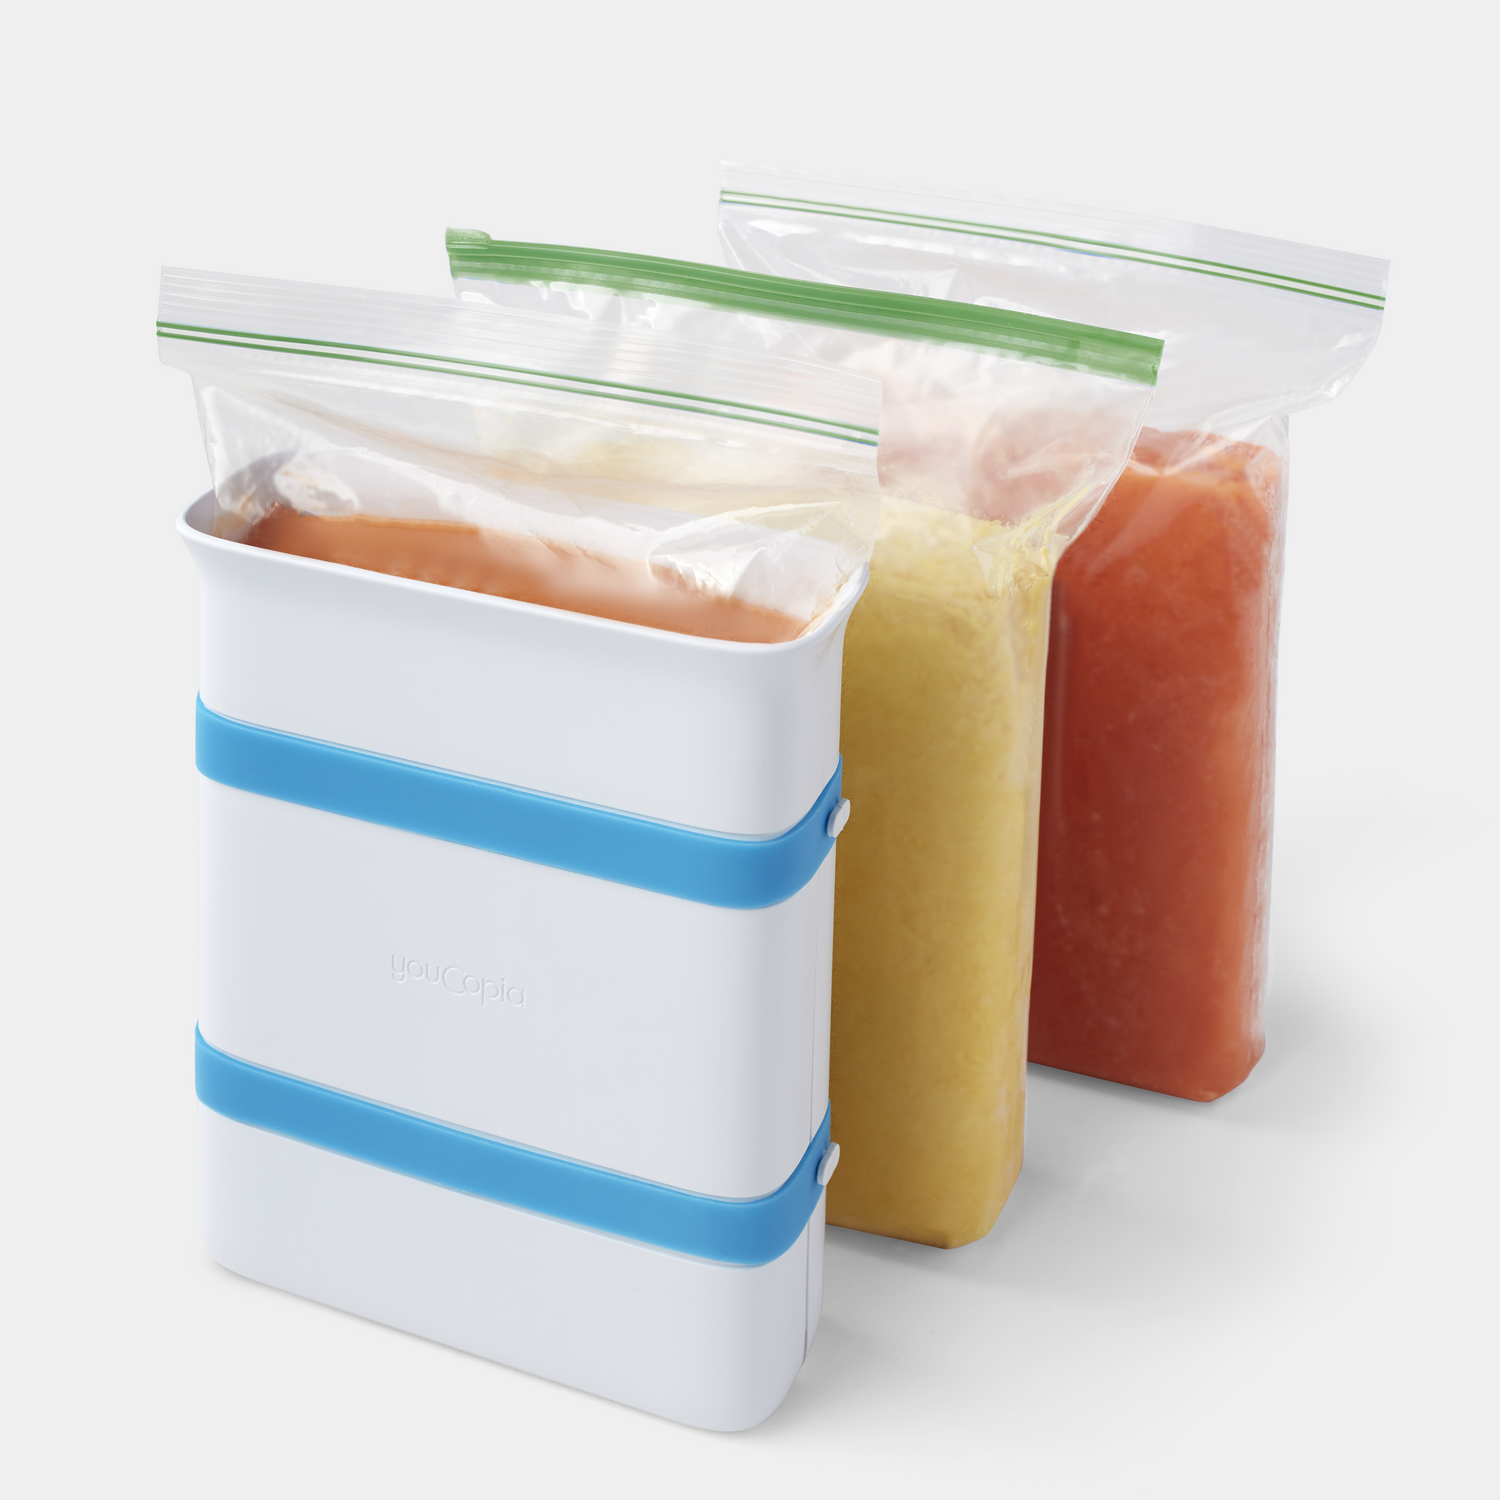 Freezer Food Block Maker Containers Vertical Freeze Up Food